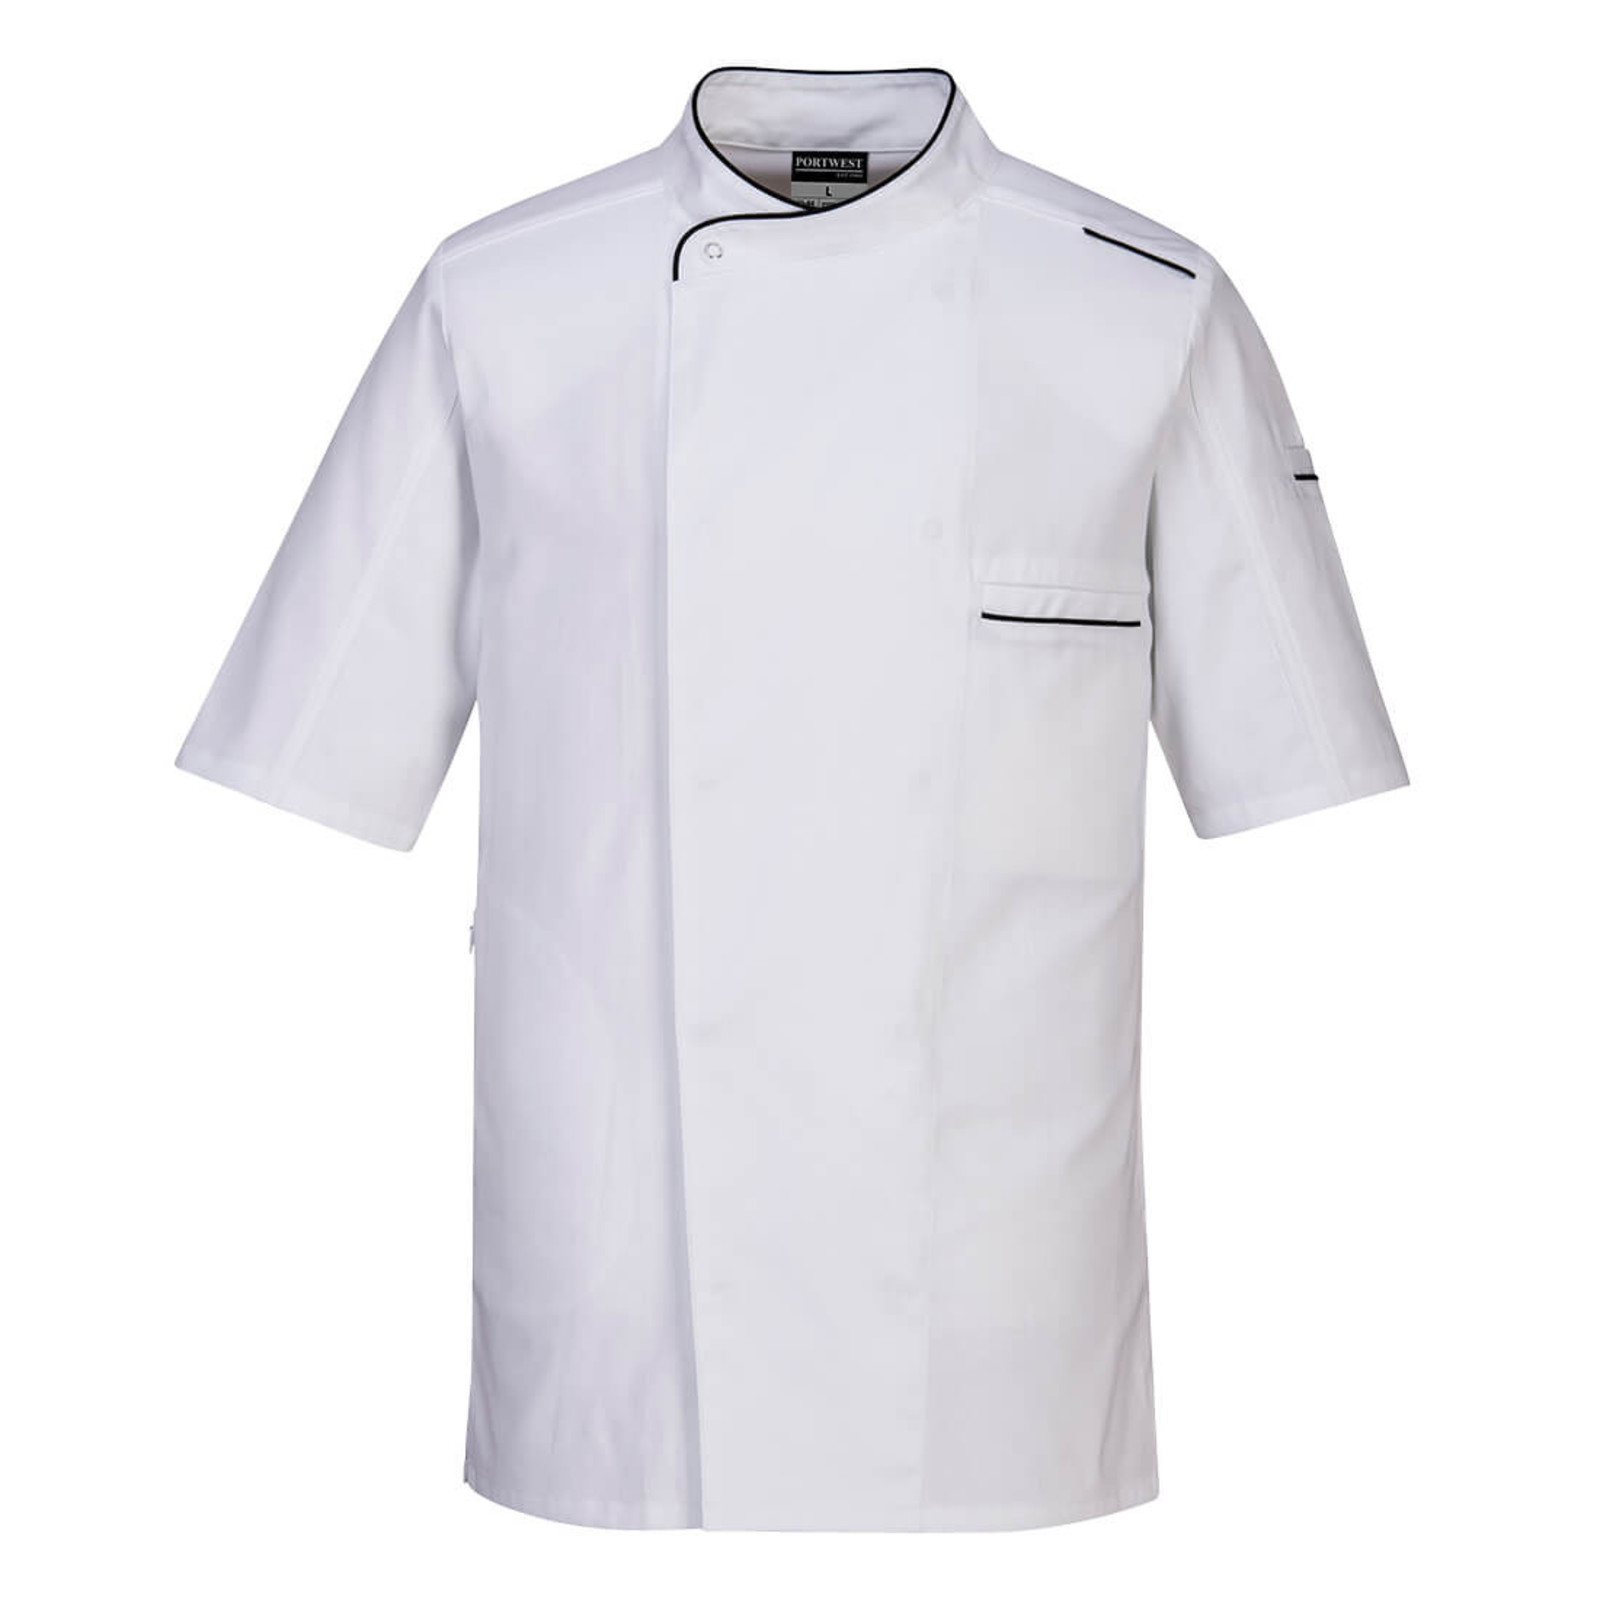 Kuchárska blúza Portwest Surrey Chefs S/S C735 - veľkosť: L, farba: biela